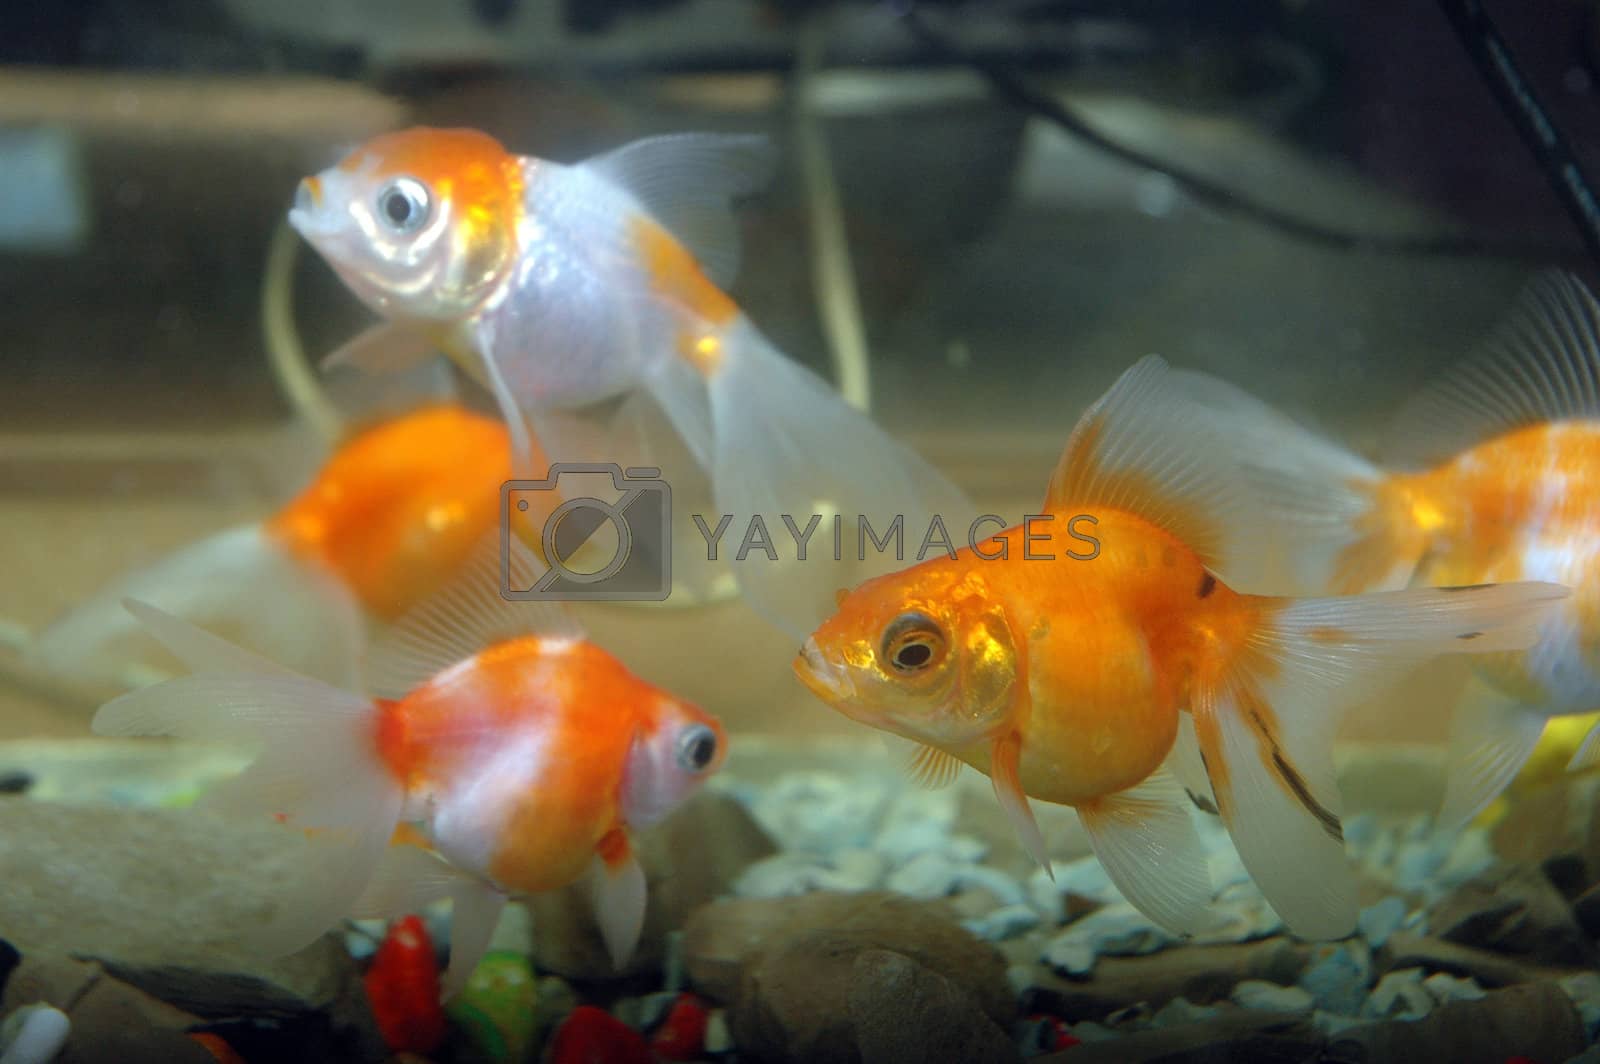 Royalty free image of goldfish  by antonihalim